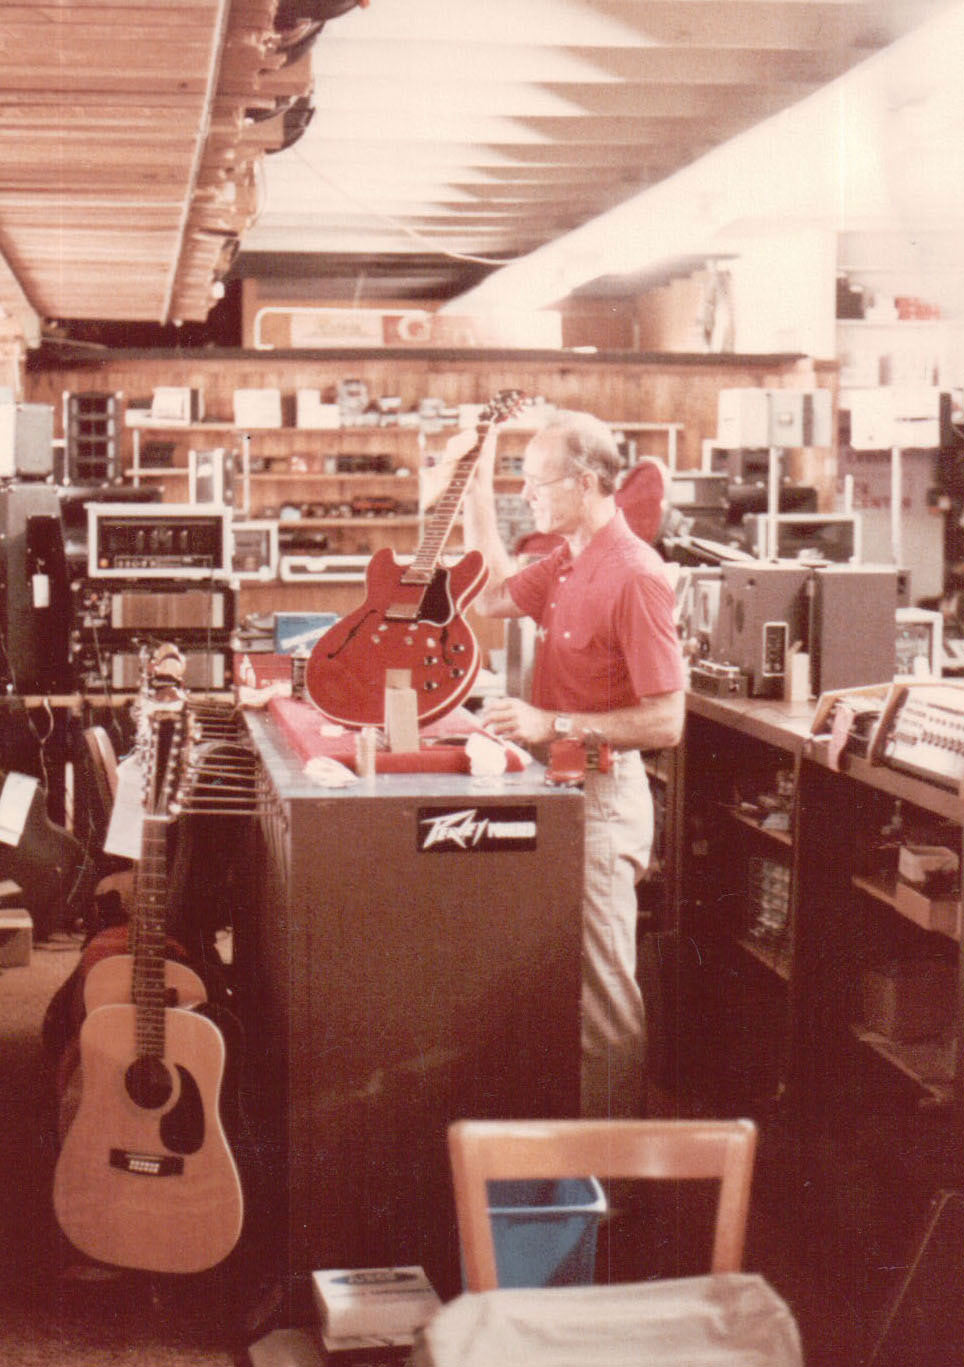 John Carlton with a guitar